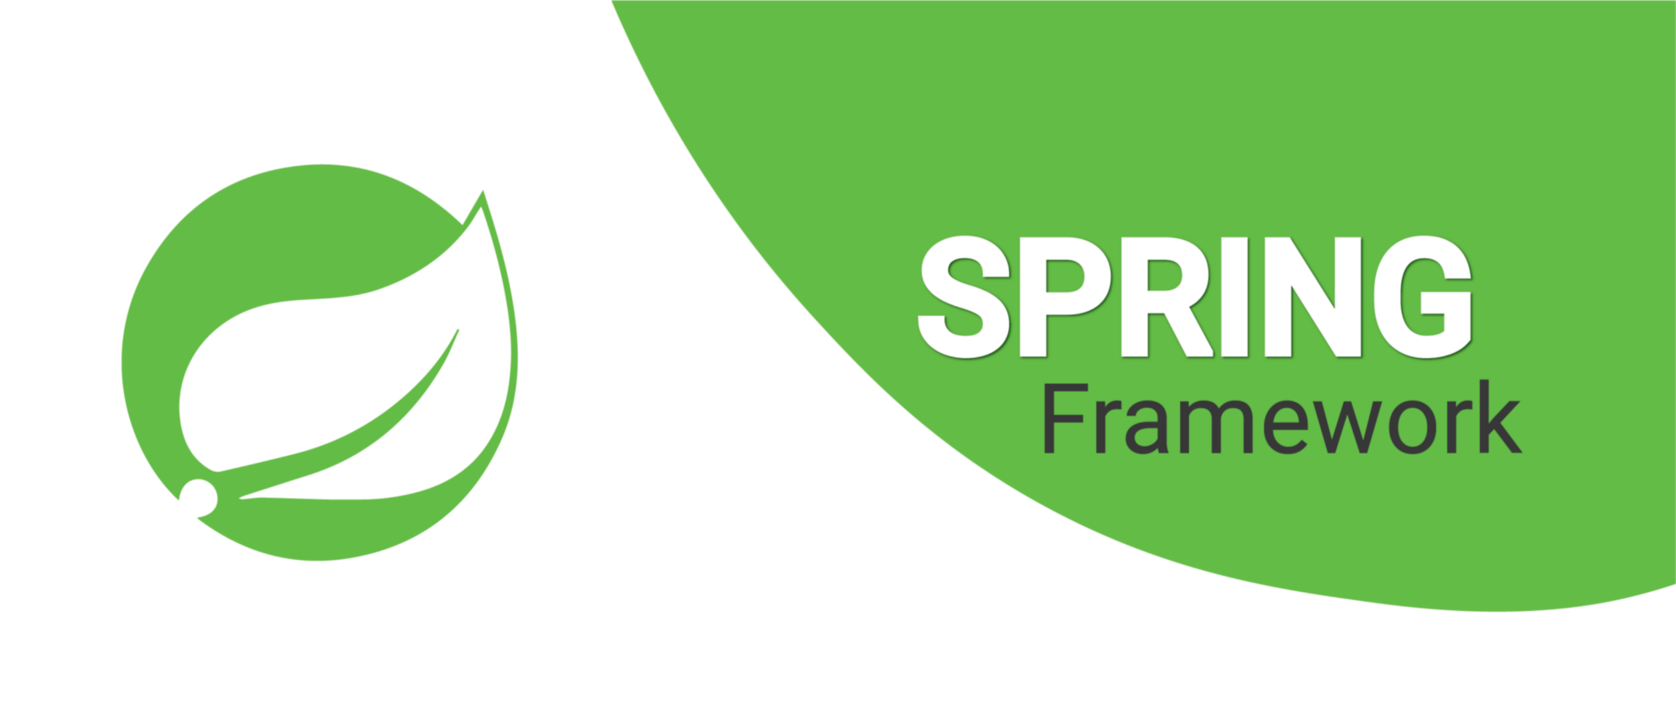 Java-Spring-Framework